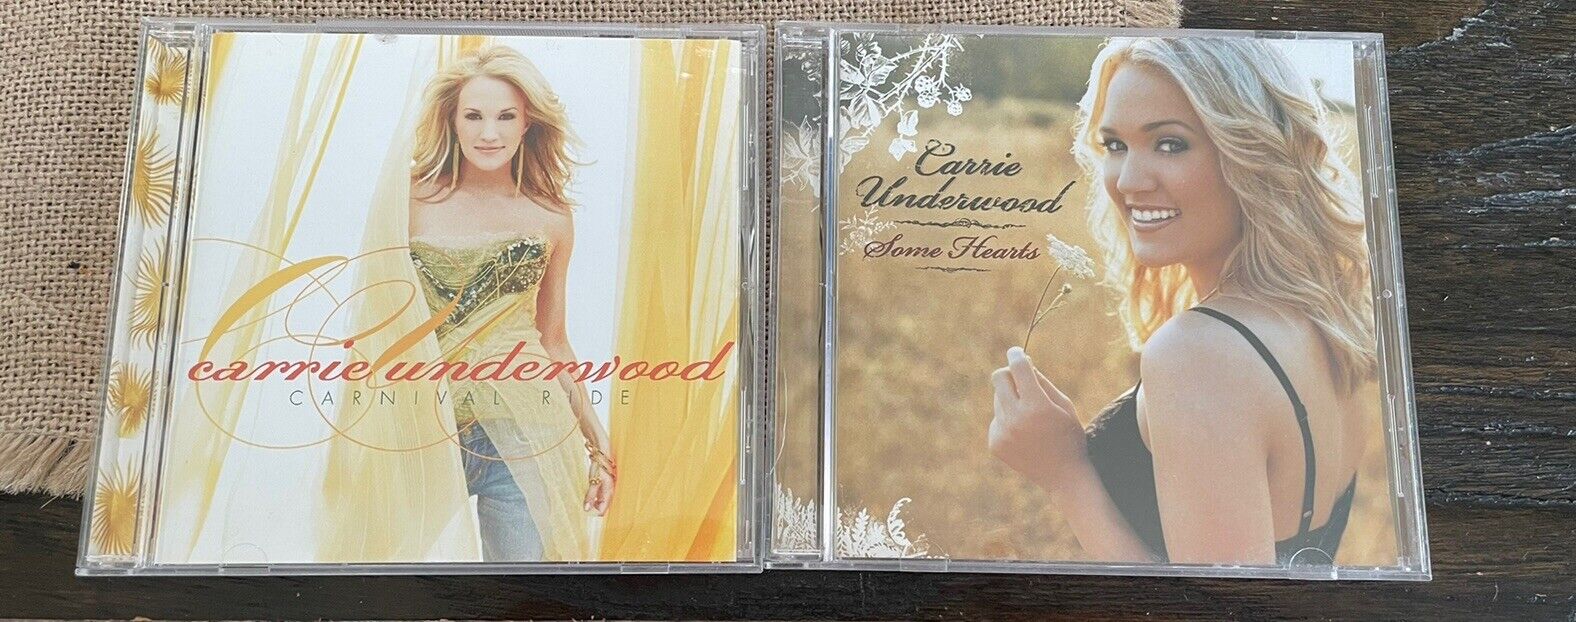 Carrie Underwood CD Lot